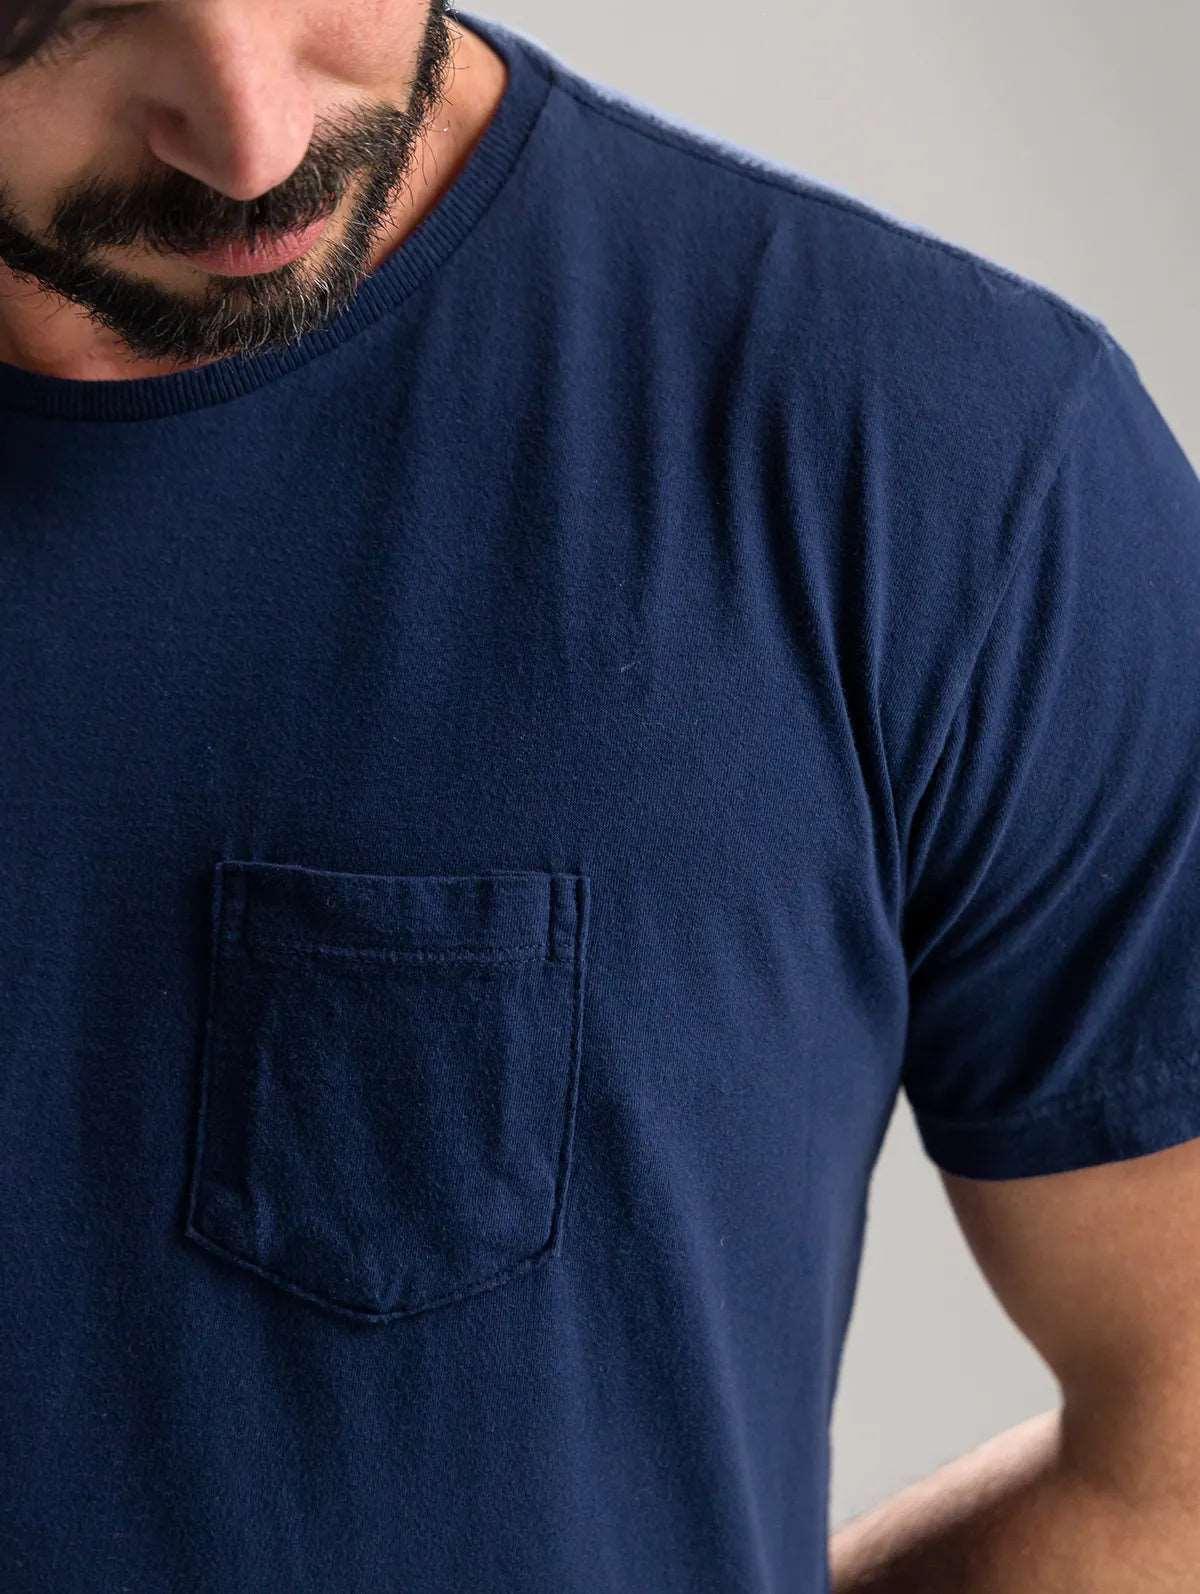 Camiseta Básica Azul Marinho com Bolso Kessler - Kessler